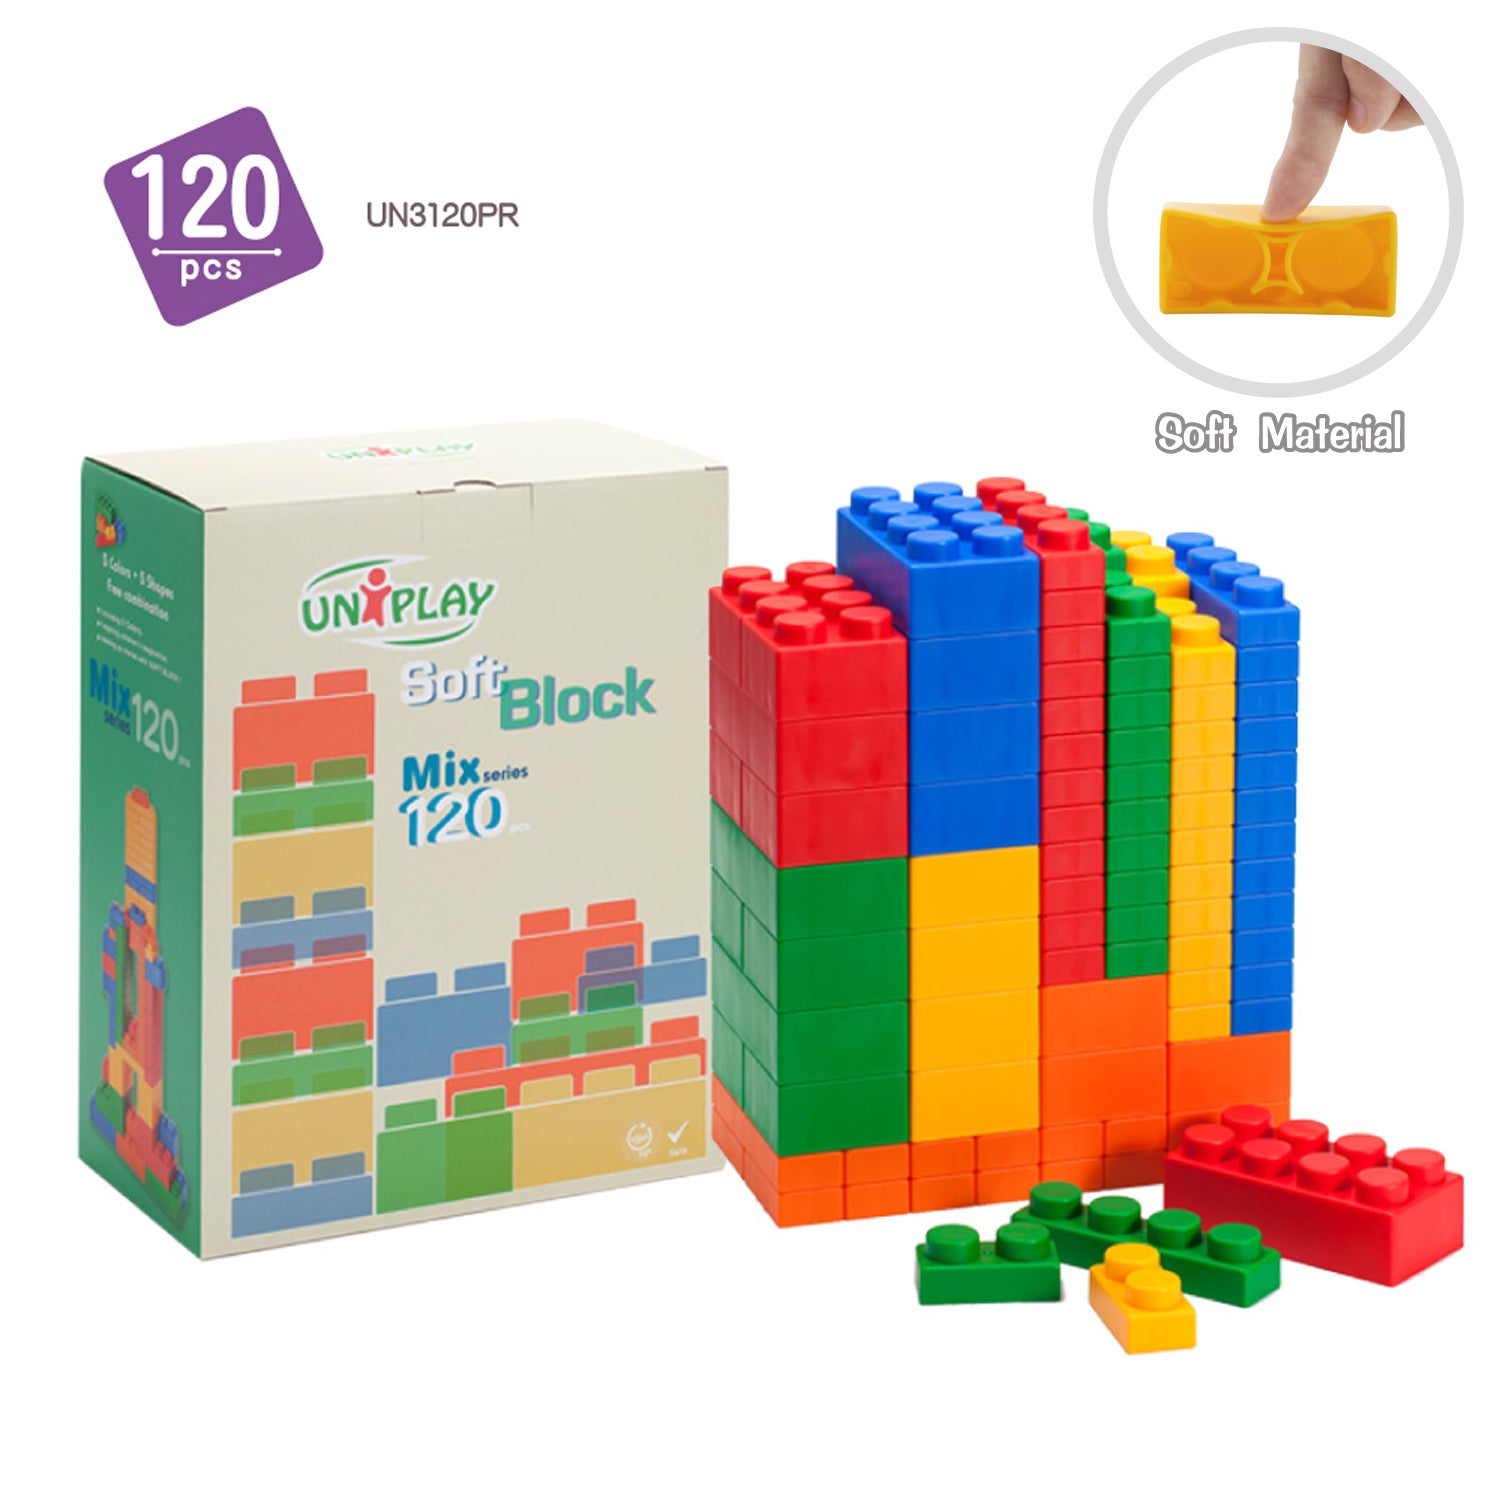 UNiPLAY Soft Building Blocks Mix Series 120pcs (#UN3120PR)( 4 sets a ctn)